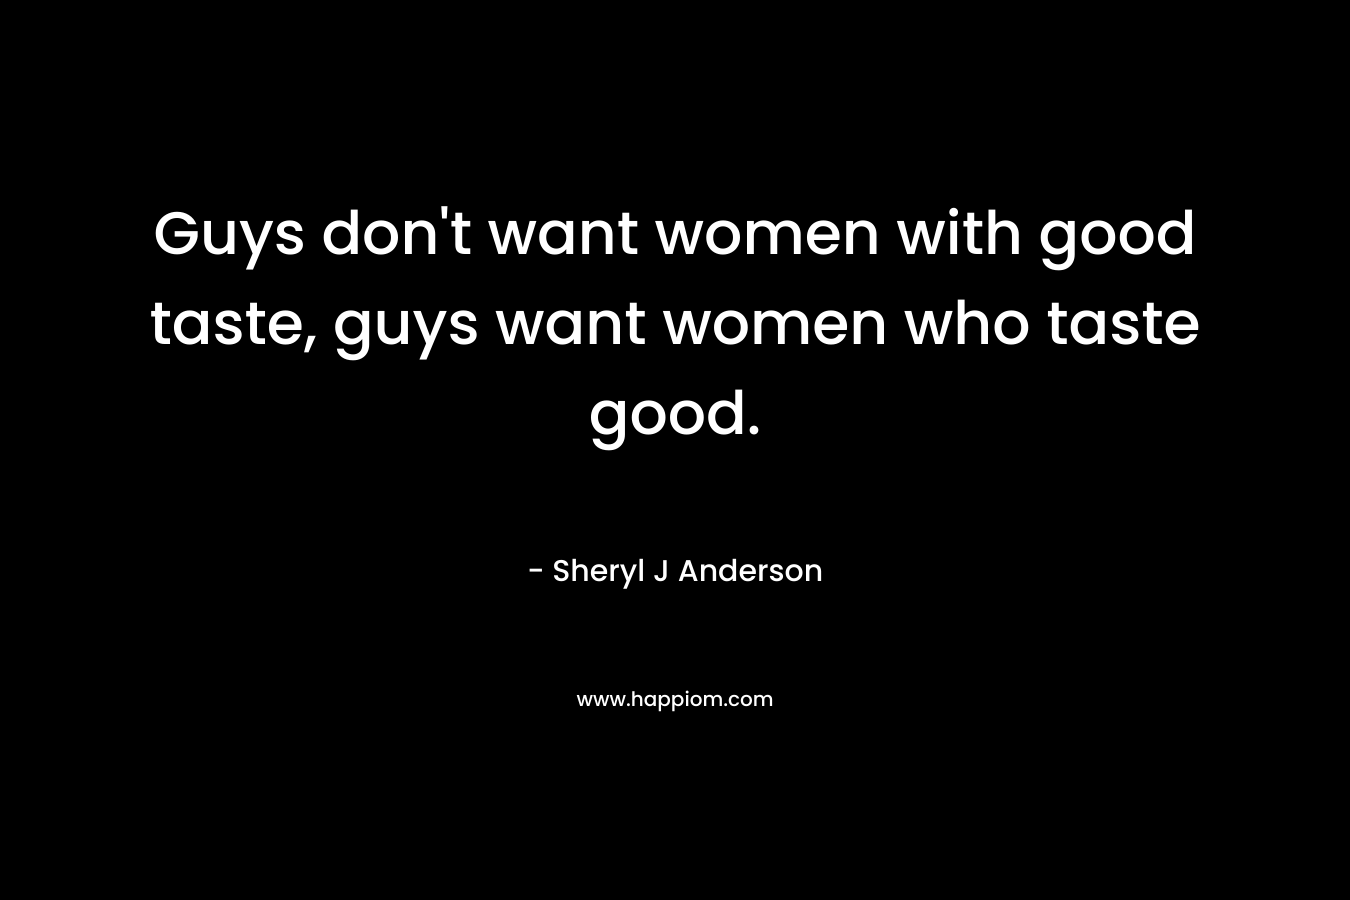 Guys don't want women with good taste, guys want women who taste good.